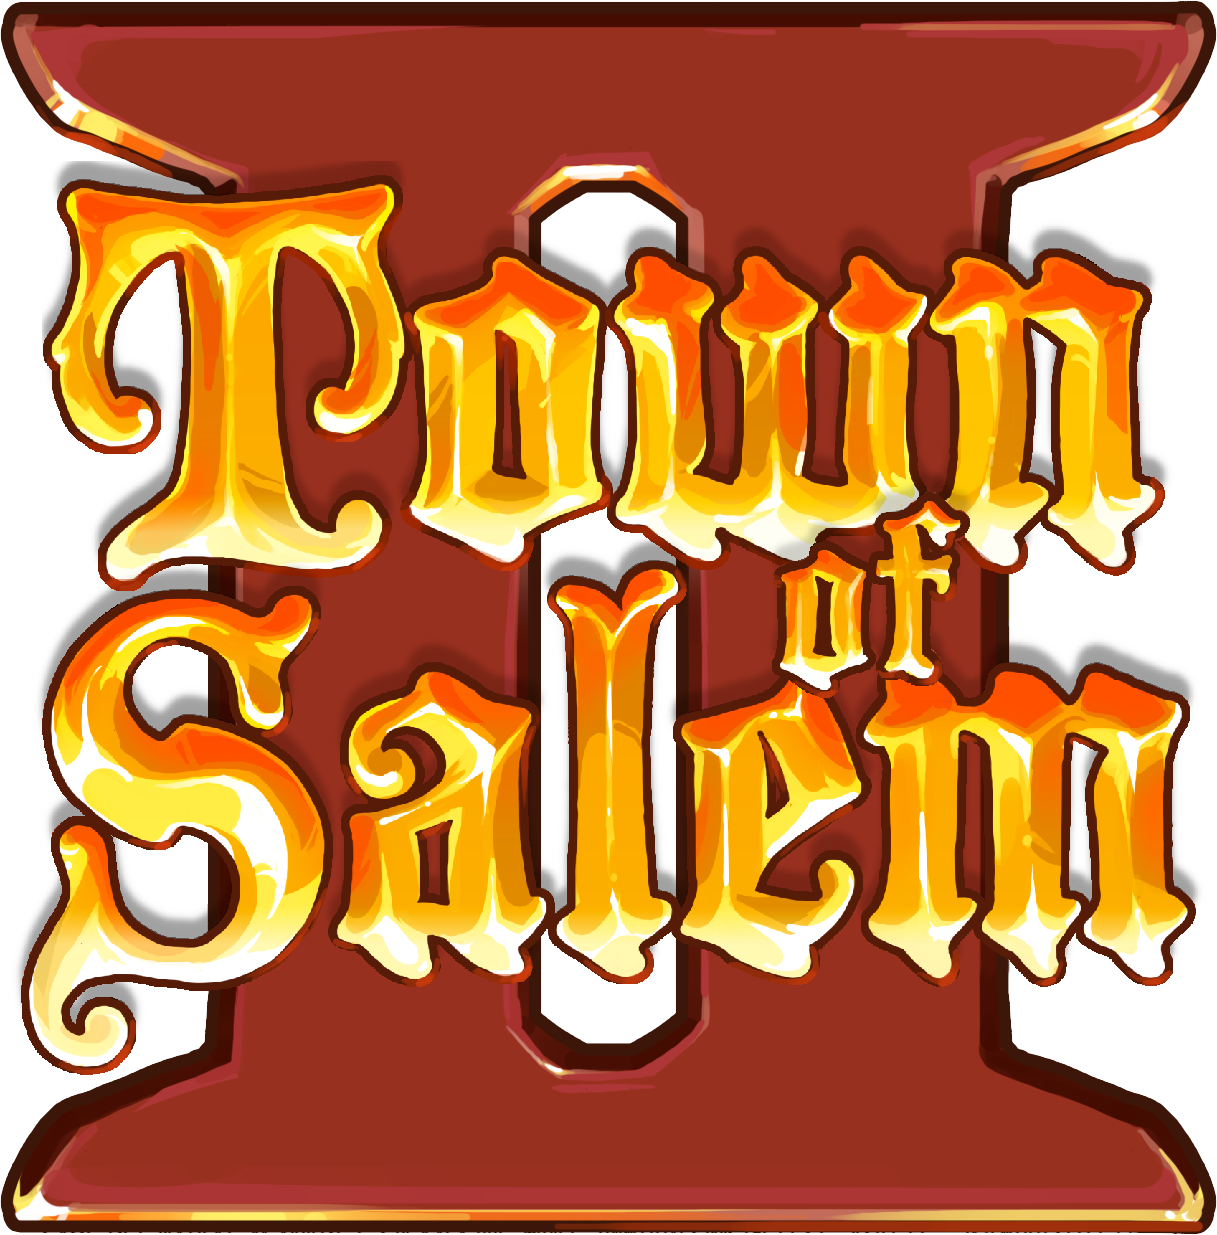 Town of Salem 2 on Steam